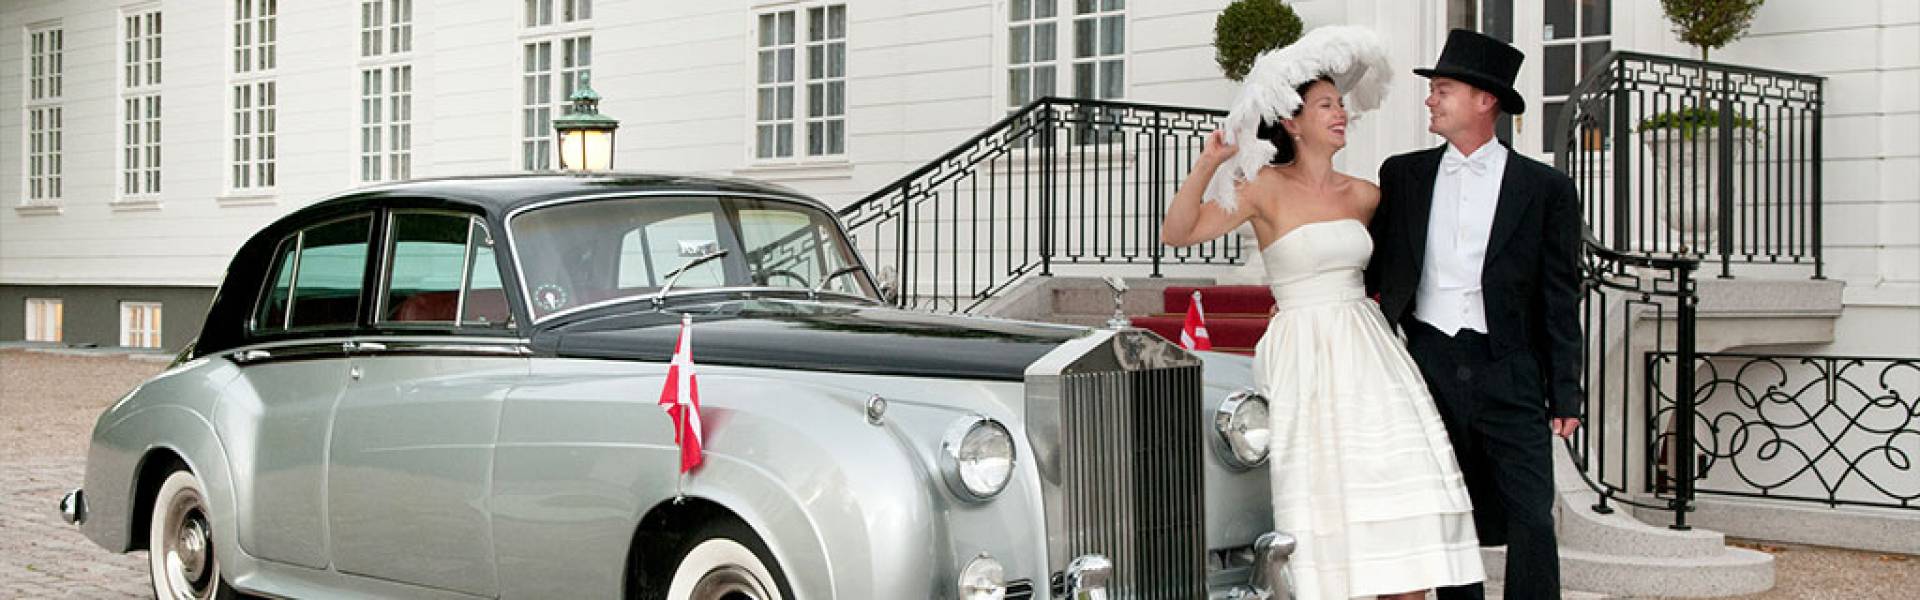 Wedding Cars Hire In Bristol